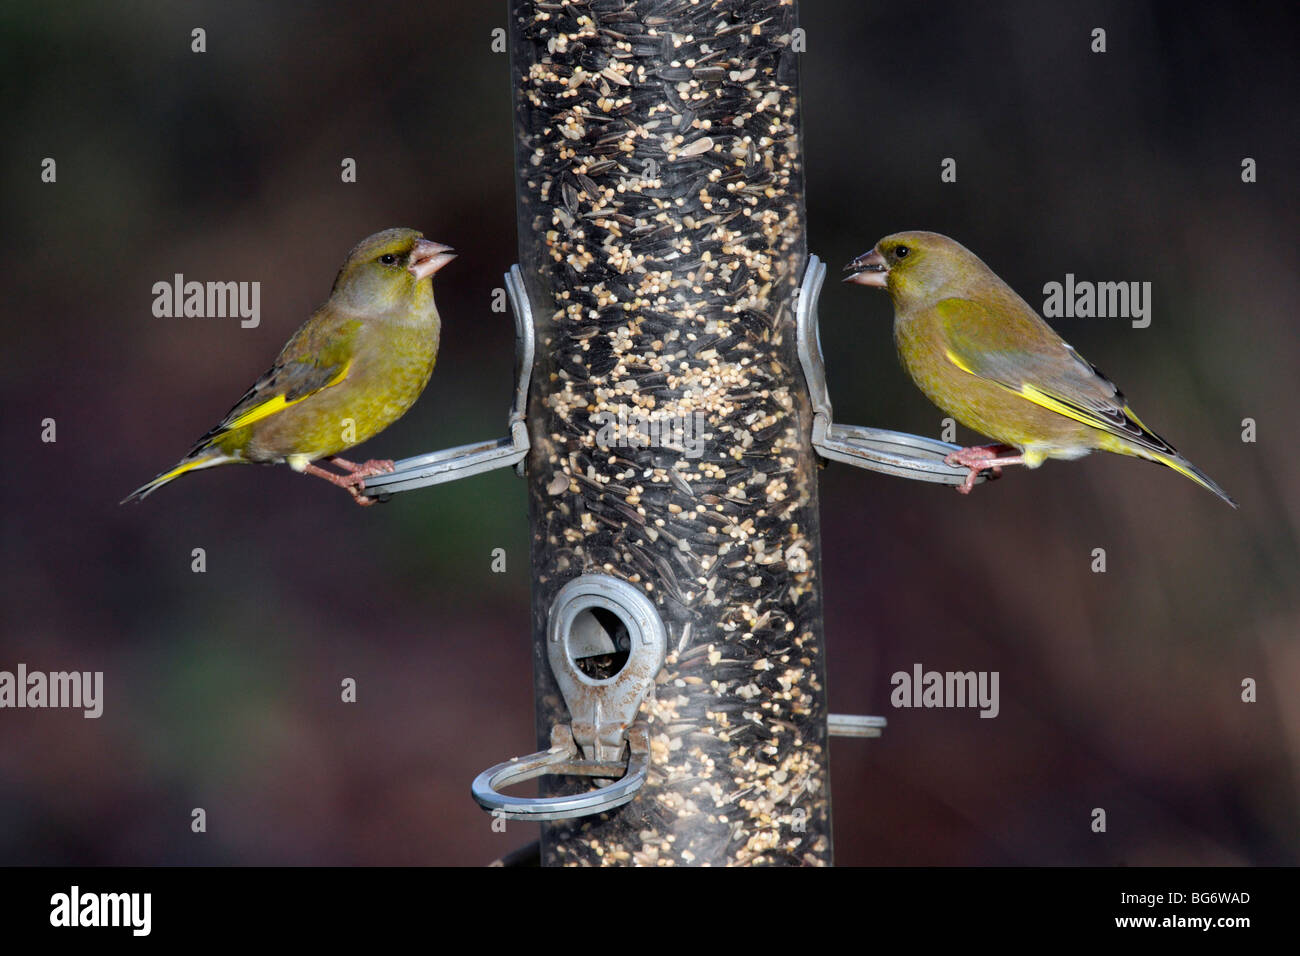 Greenfinch, Carduelis chloris, two birds on a bird feeder, Shropshire 2009 Stock Photo